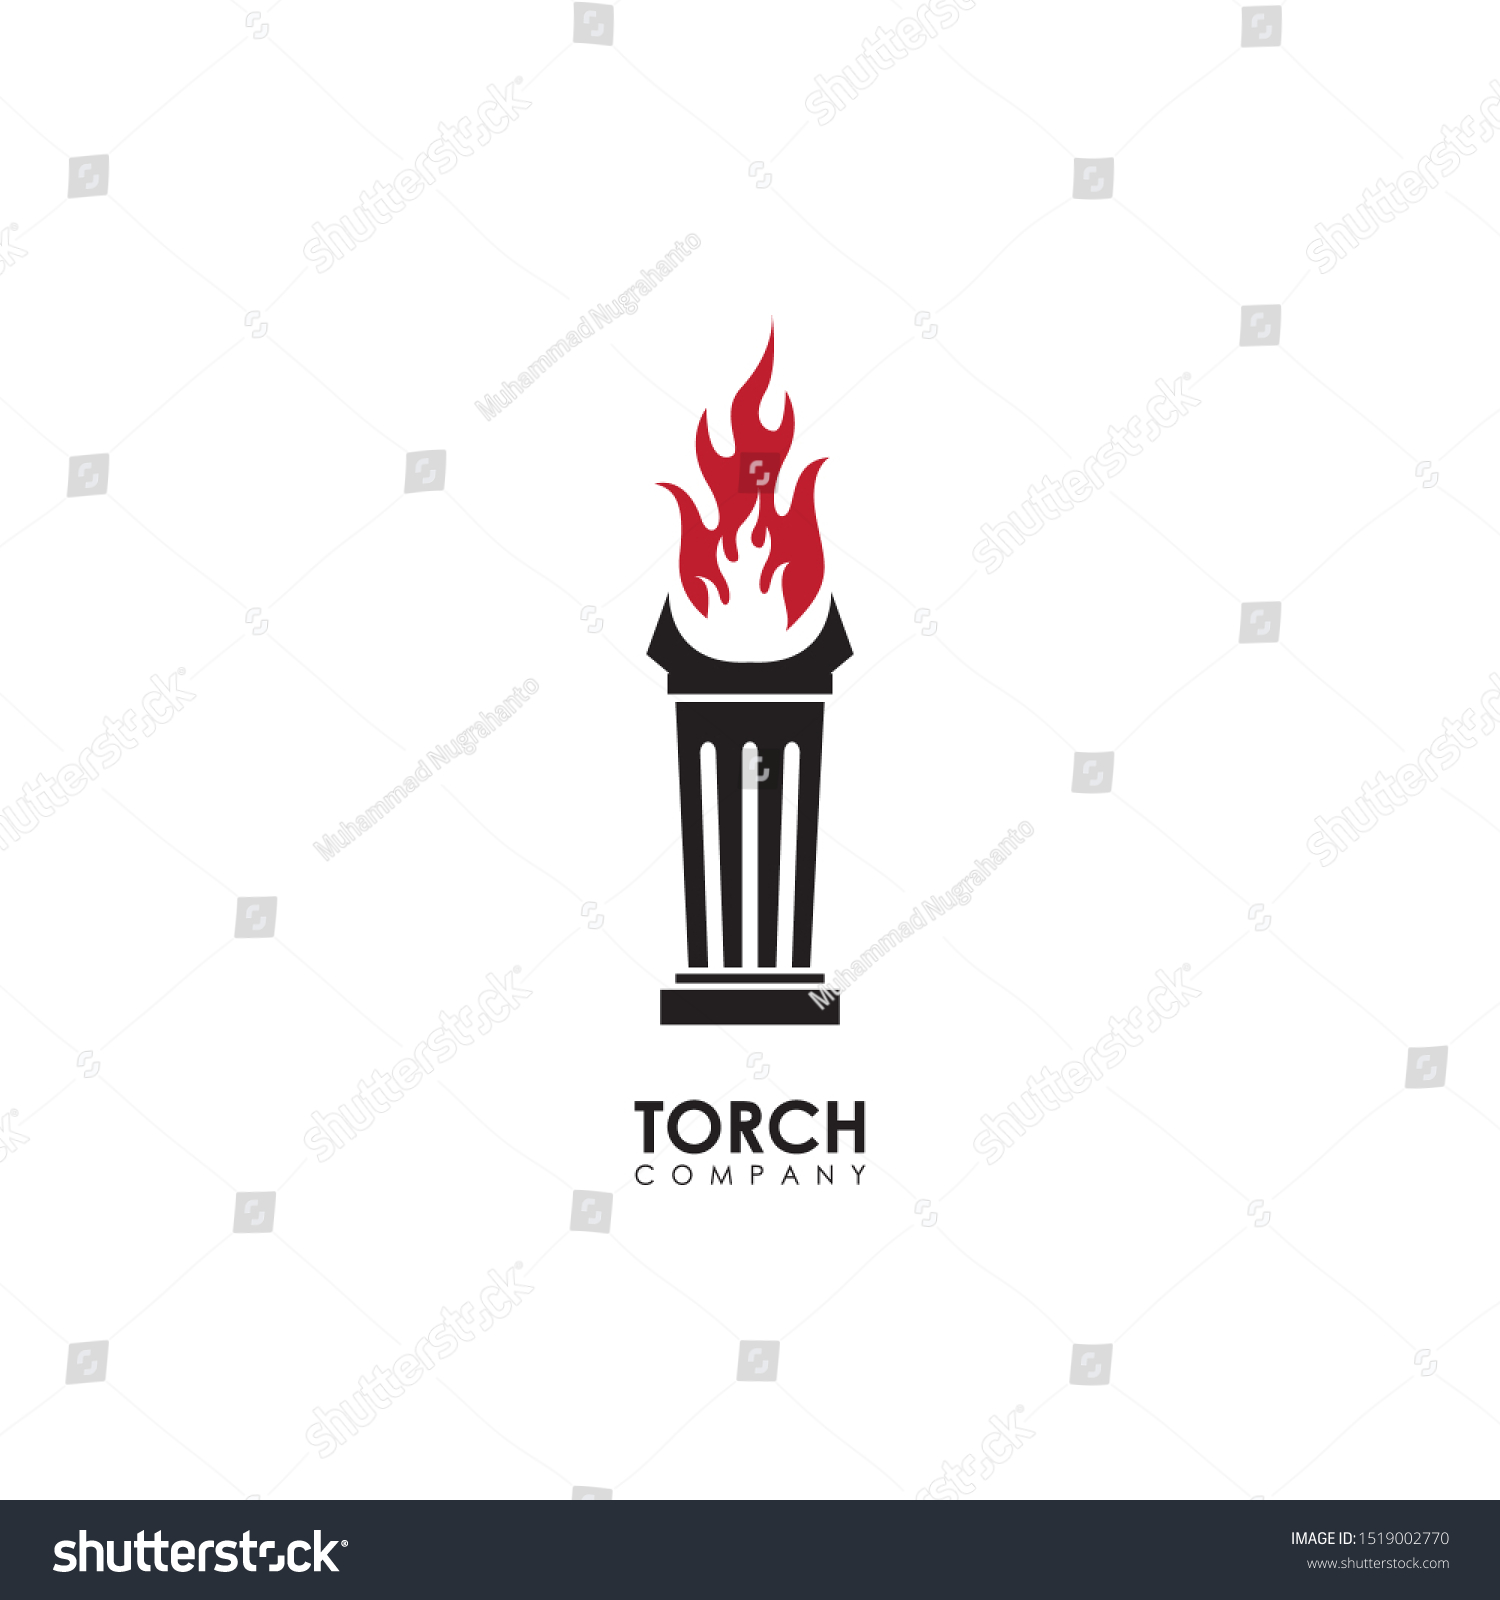 torch company